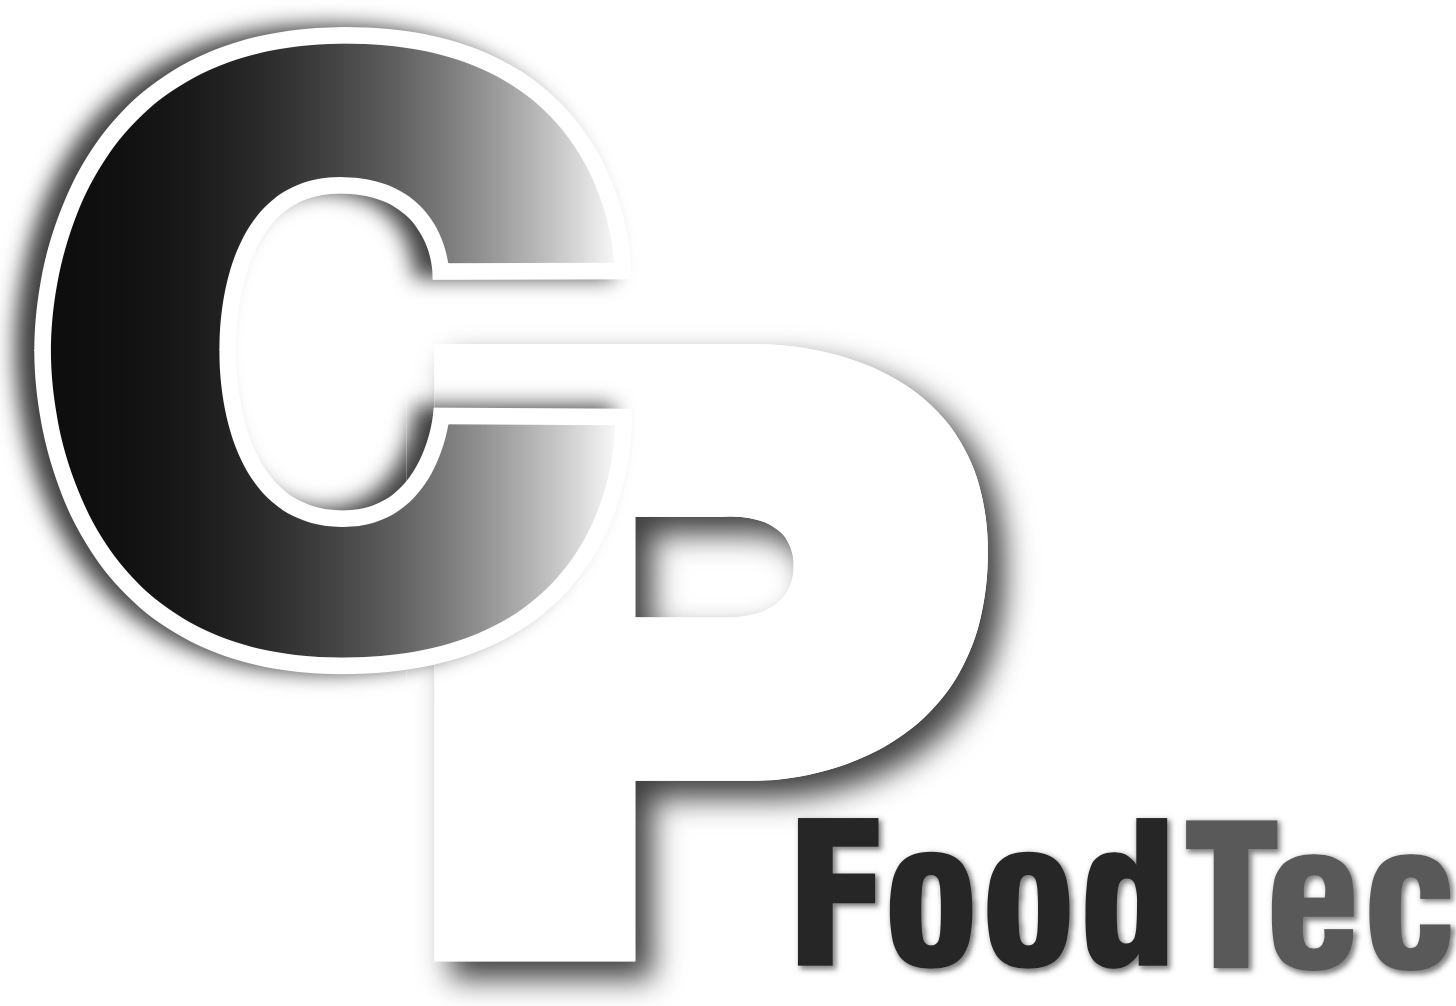 CP FoodTec